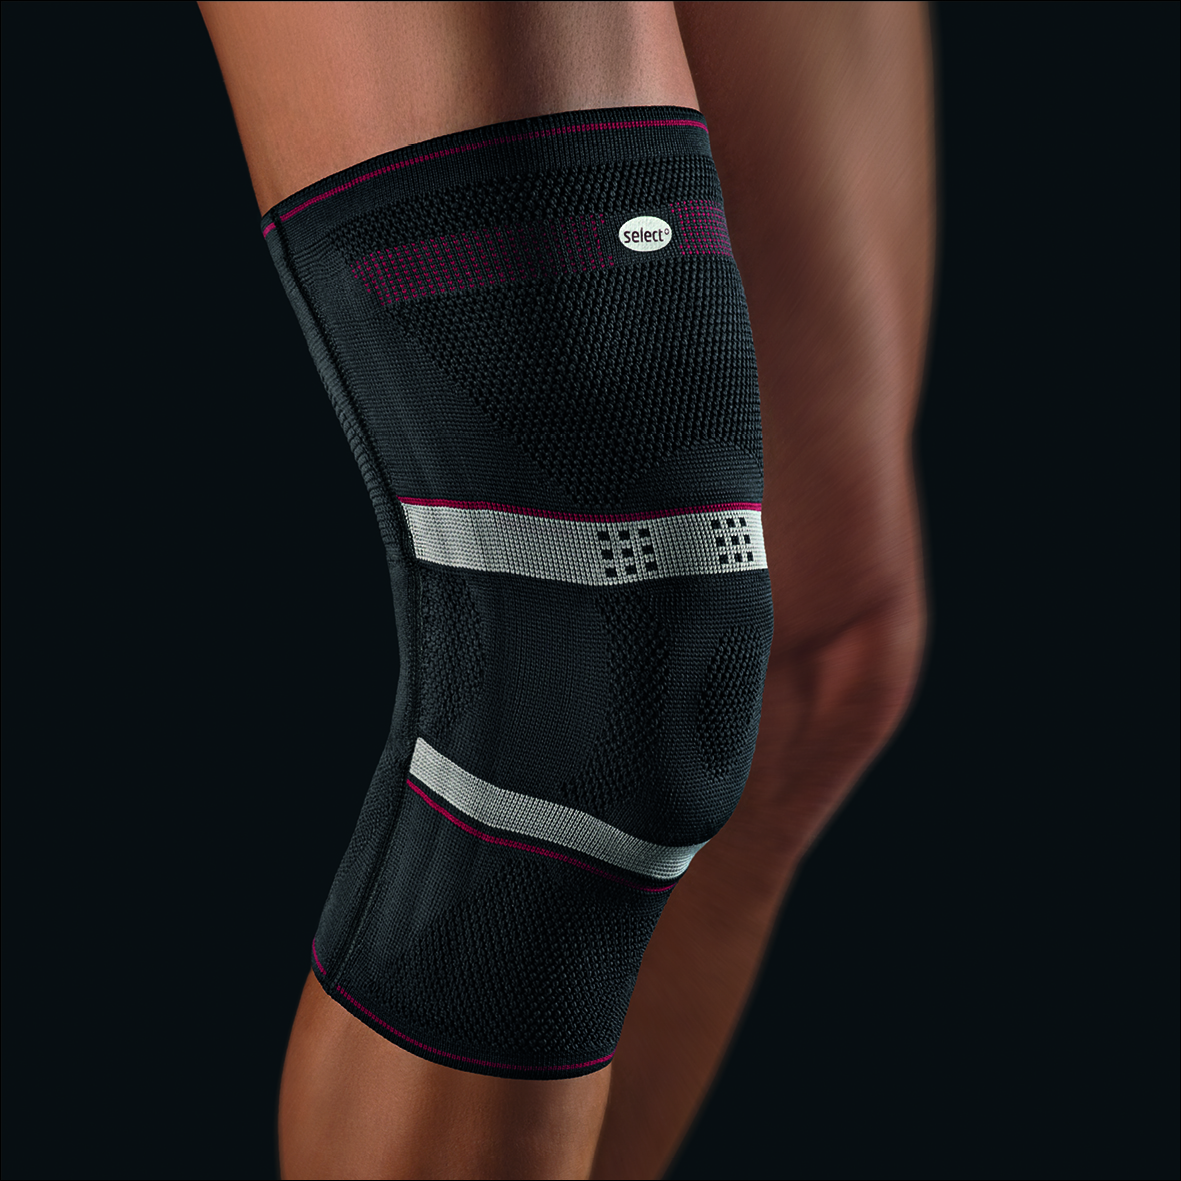 Bort select StabiloGen Kniebandage Bandage mit antibakterieller Ausrüstung